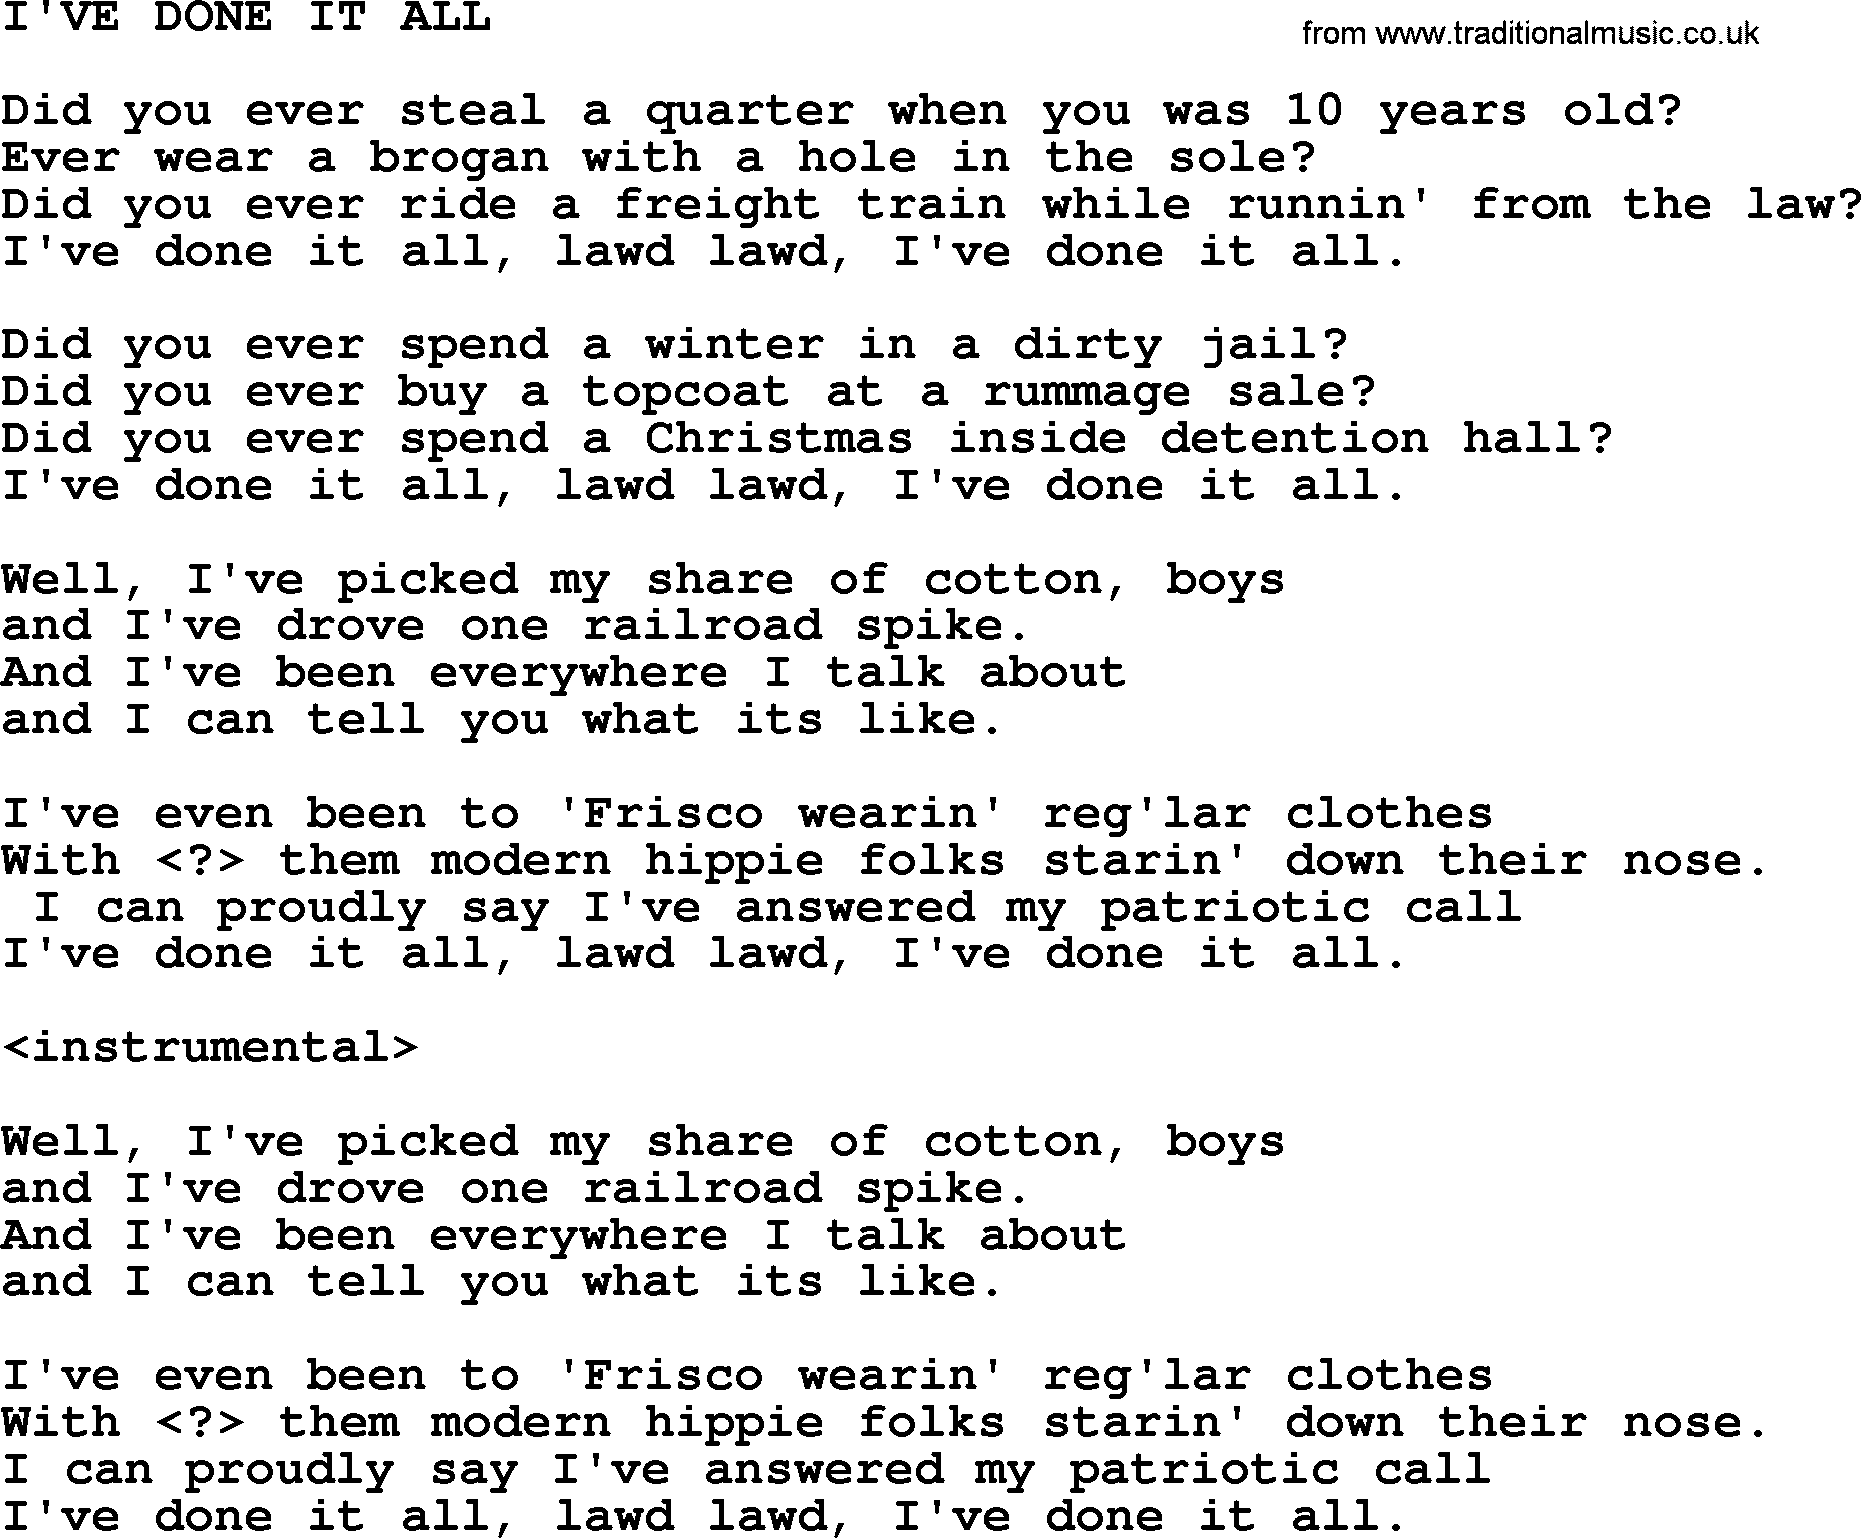 Merle Haggard song: I've Done It All, lyrics.